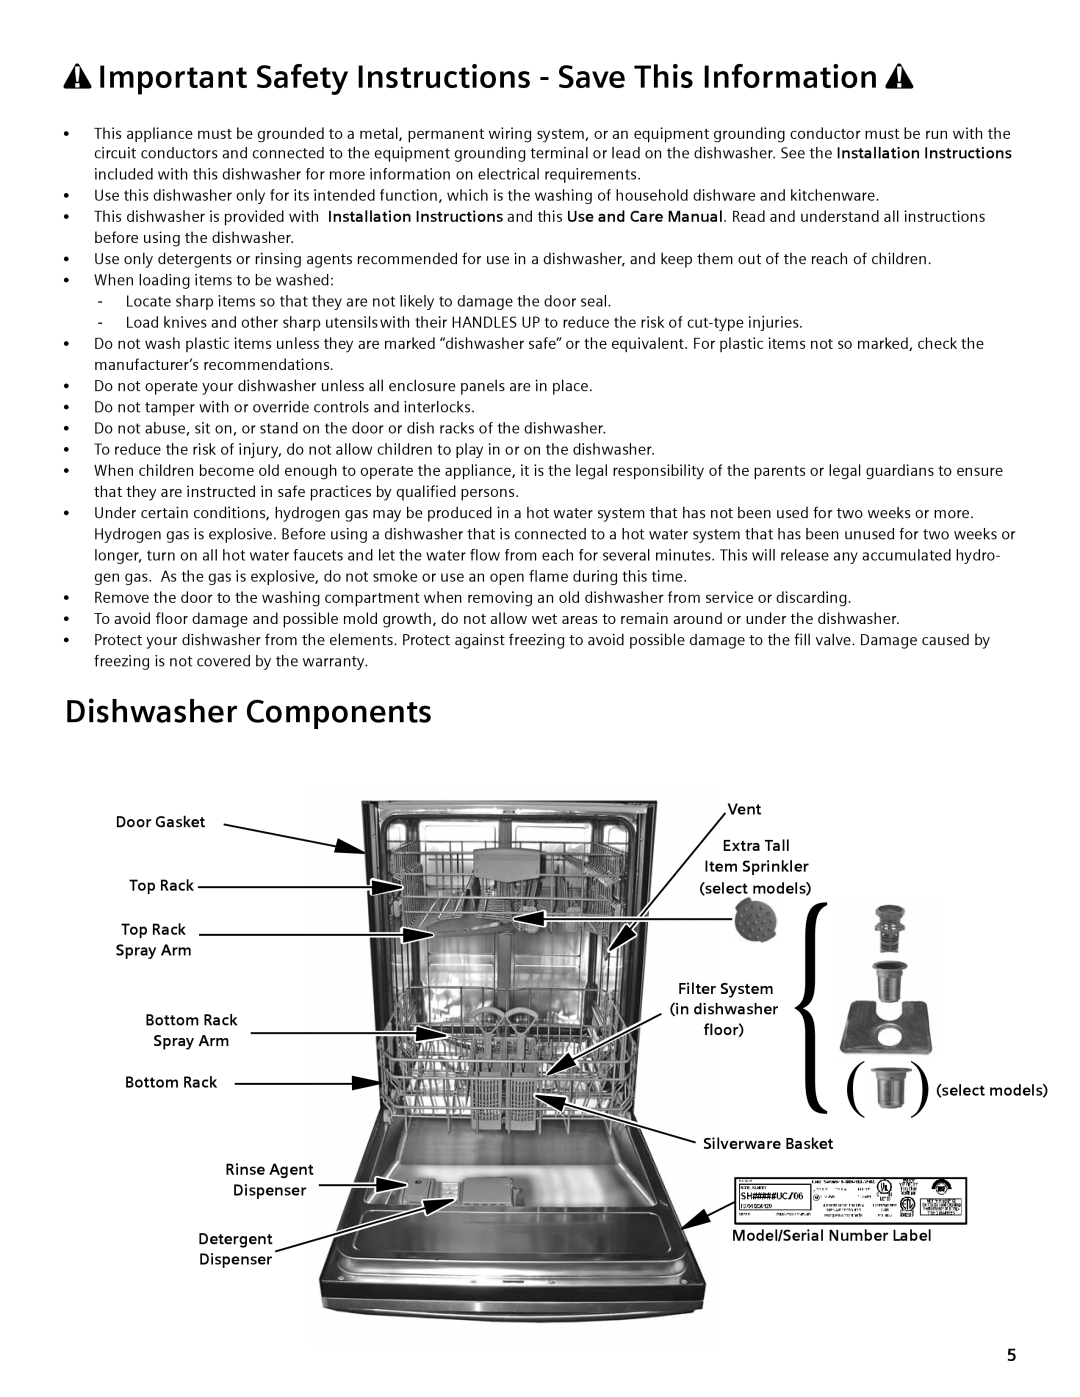 Bosch Appliances sHV57C Dishwasher Components, Door Gasket Top Rack Top Rack Spray Arm, Dispenser Detergent Dispenser 